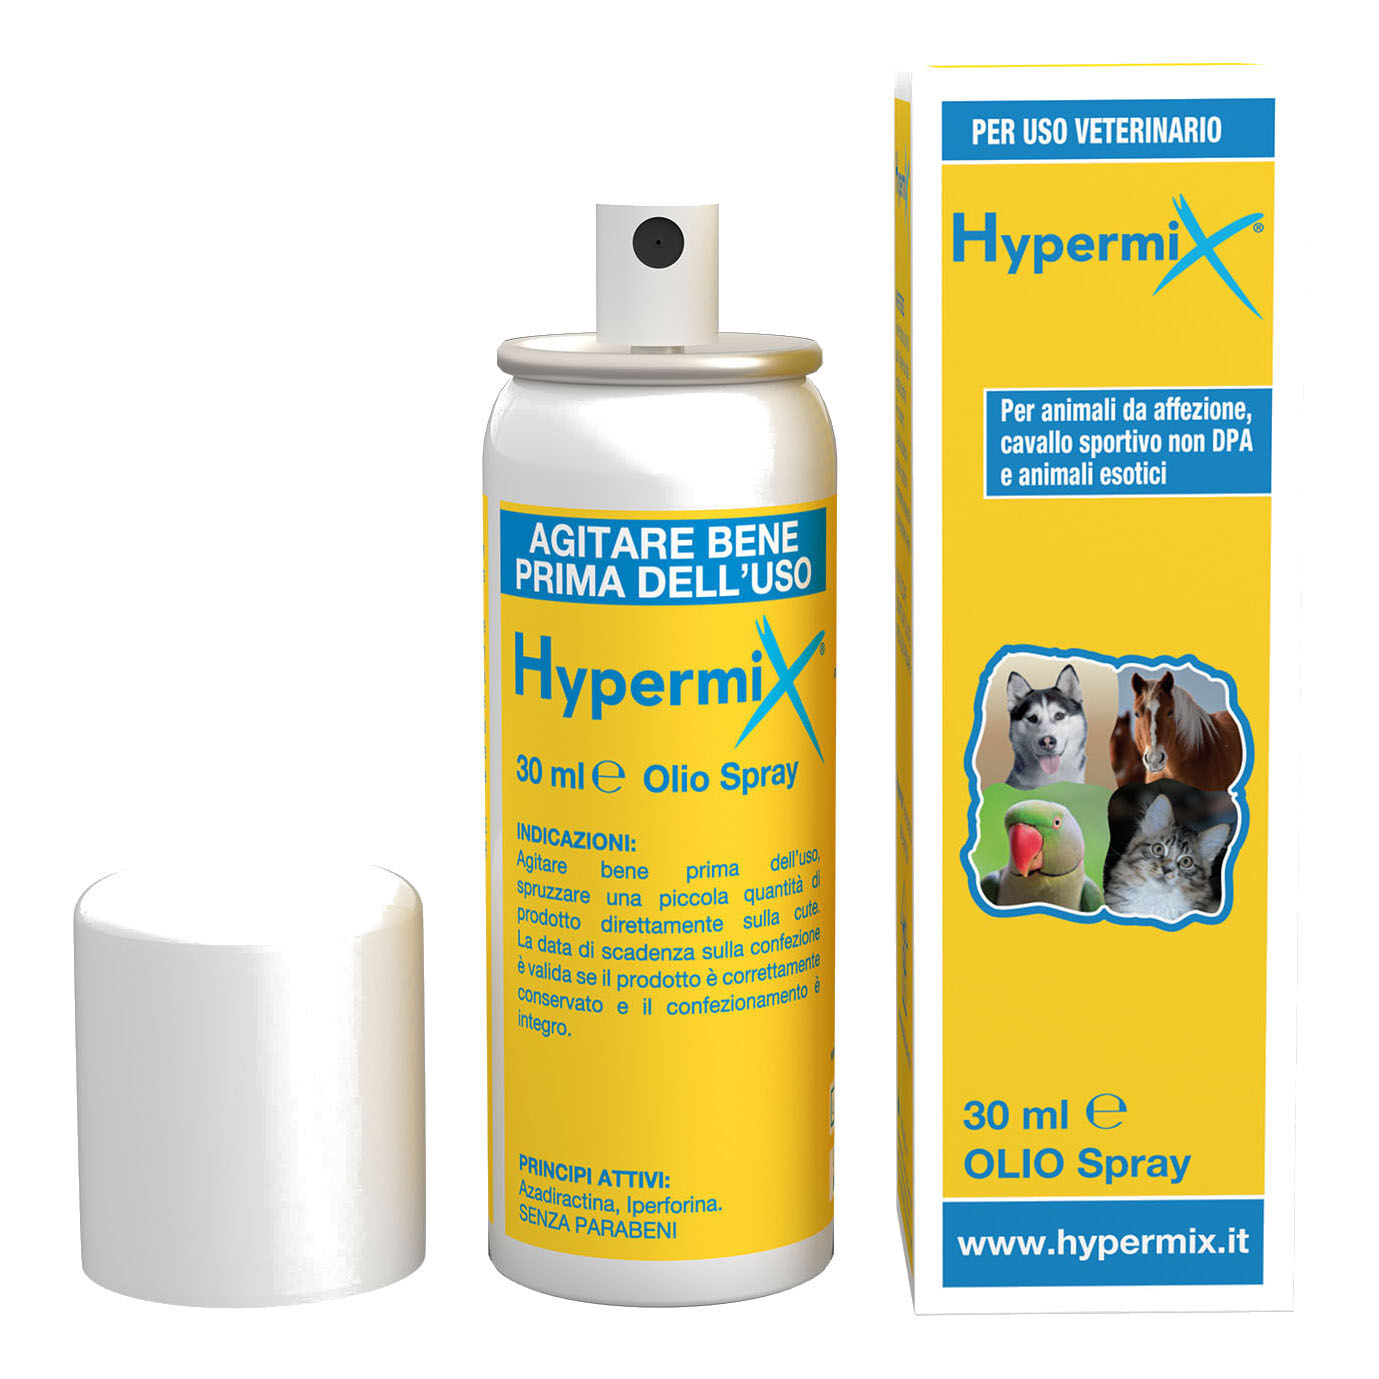 RIMOS Srl Hypermix spray 30ml